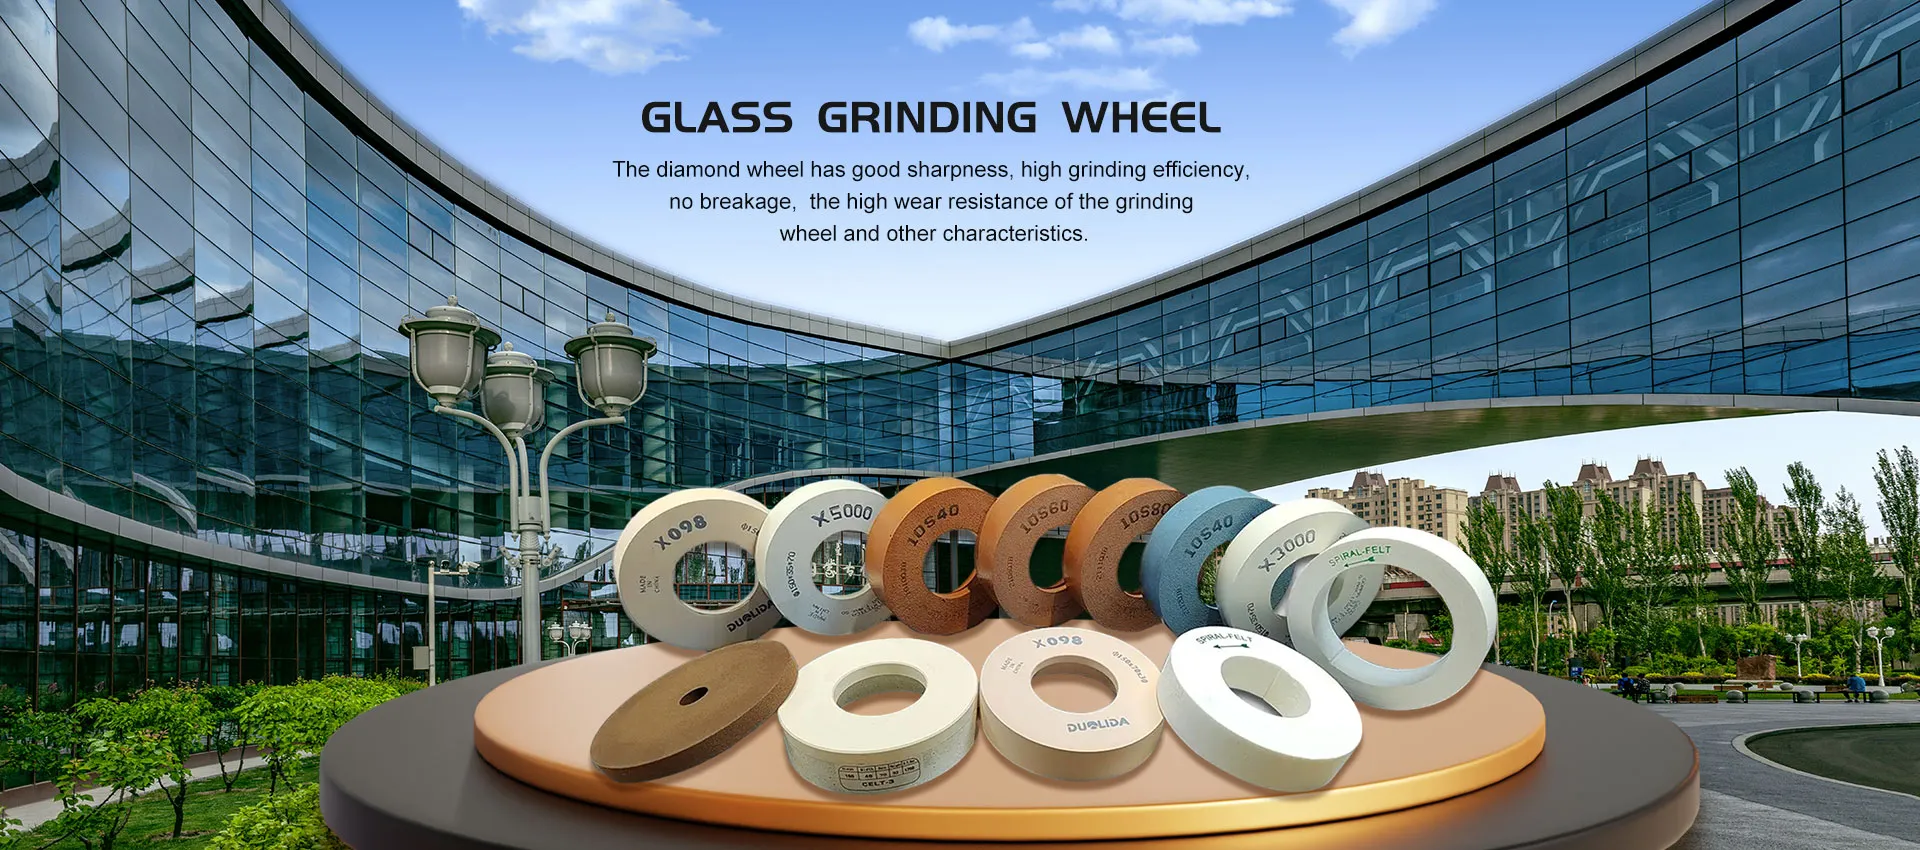 China Glass Grinding Wheel တင်သွင်းသူ